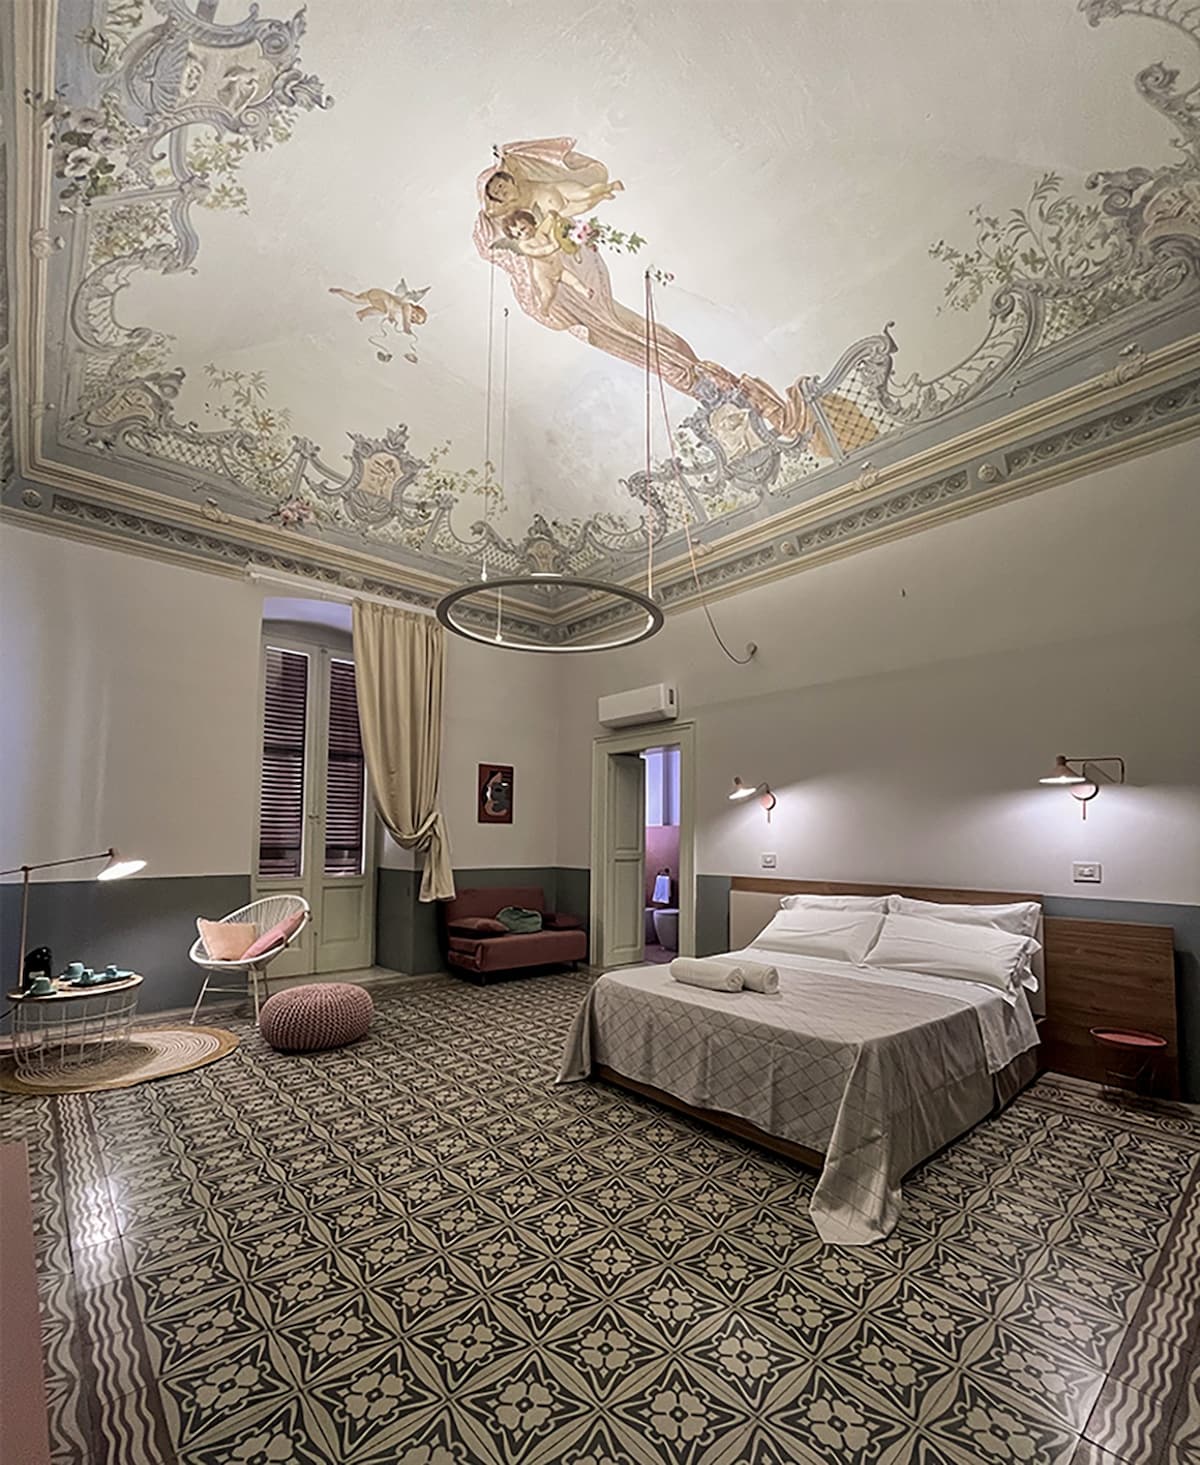 King room matrimoniale - Palazzo 1906 Eco dimora 2